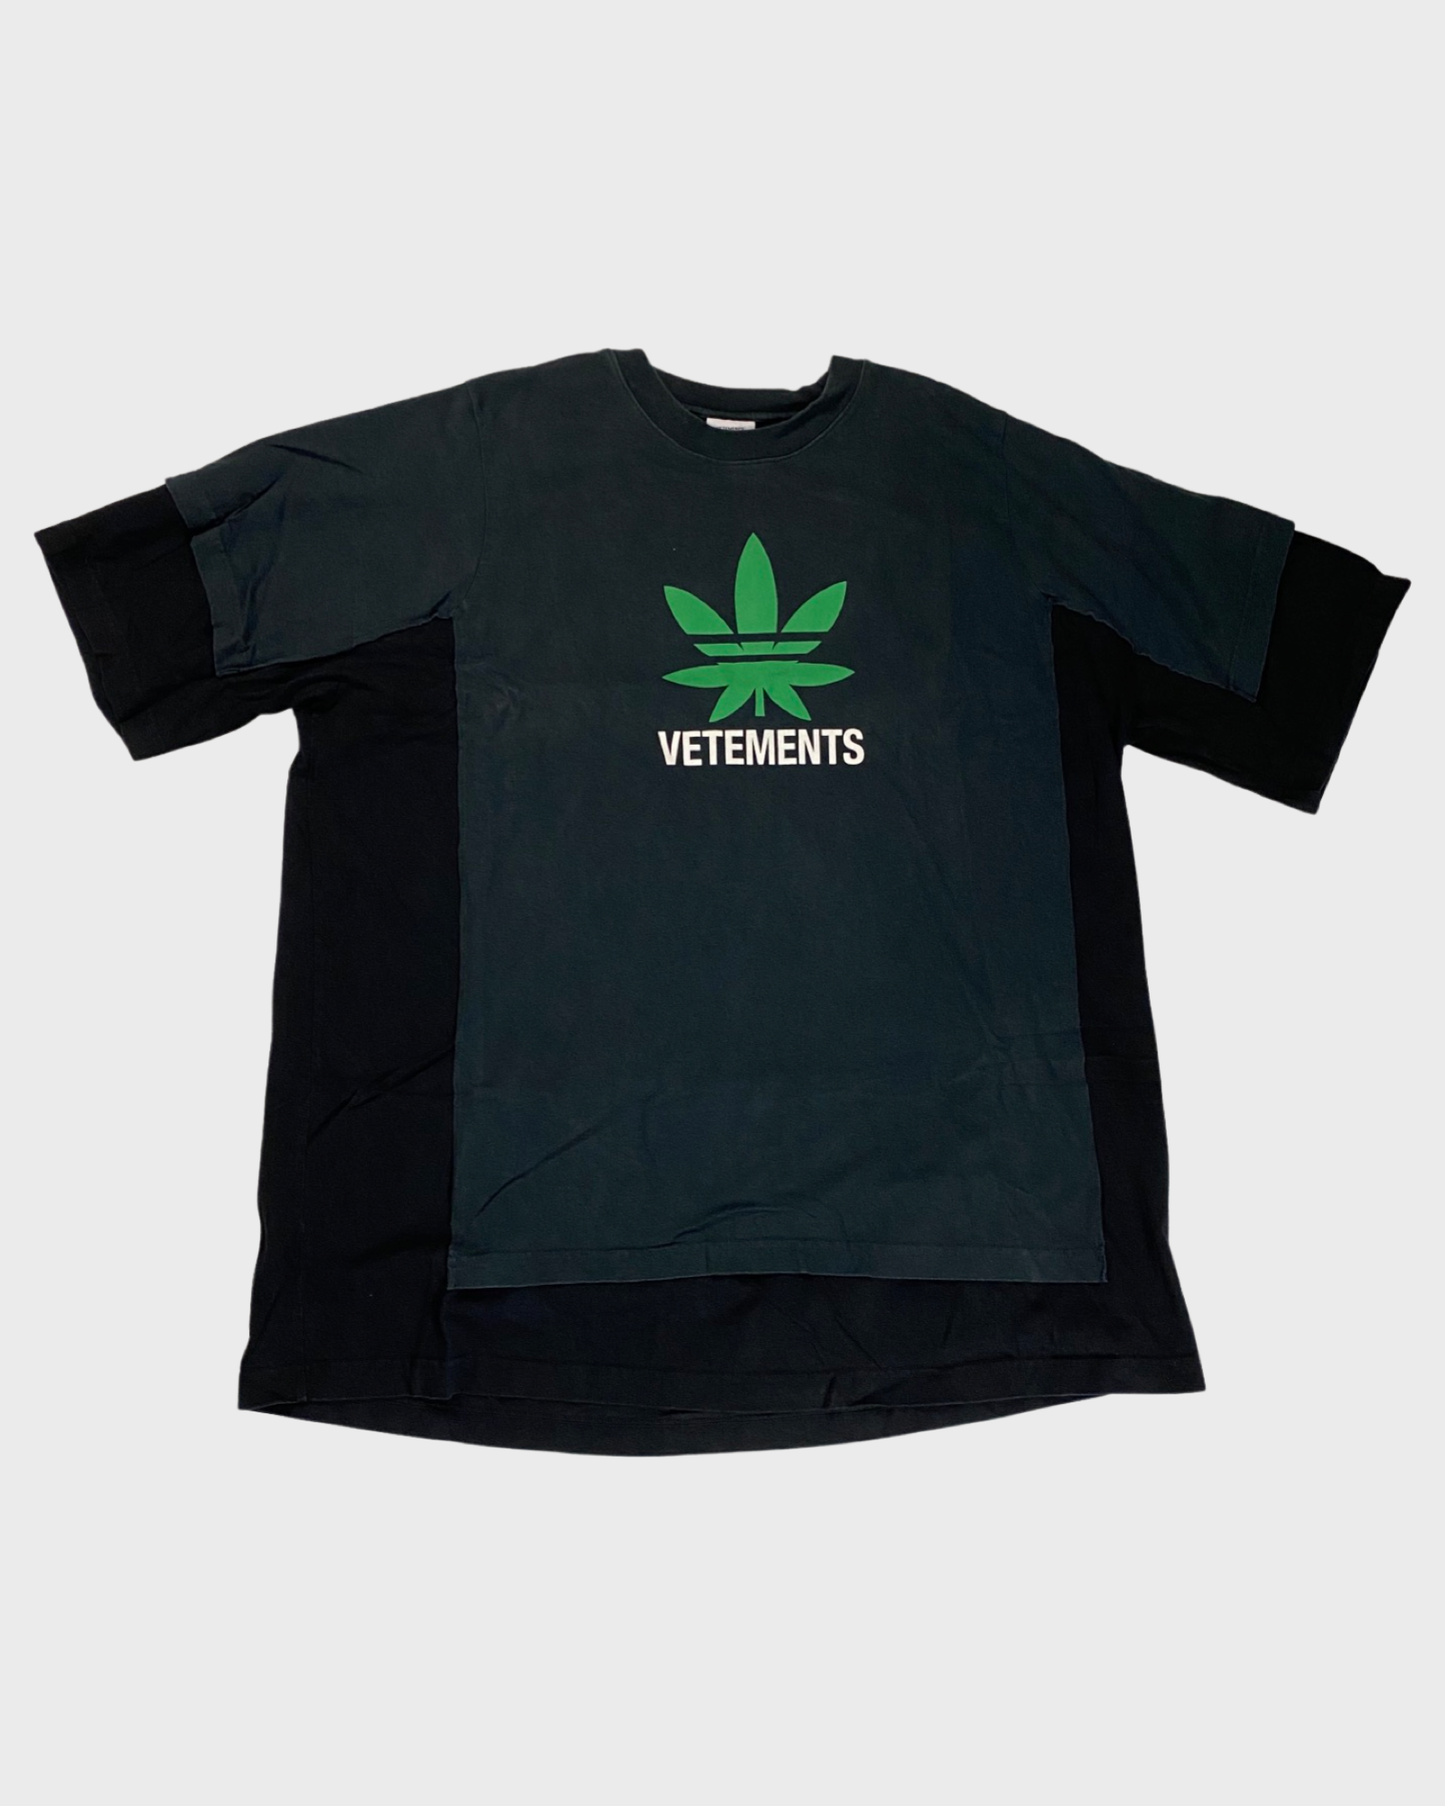 Vetements SS20 Adidas weed flower tshirt SZ:XS|S